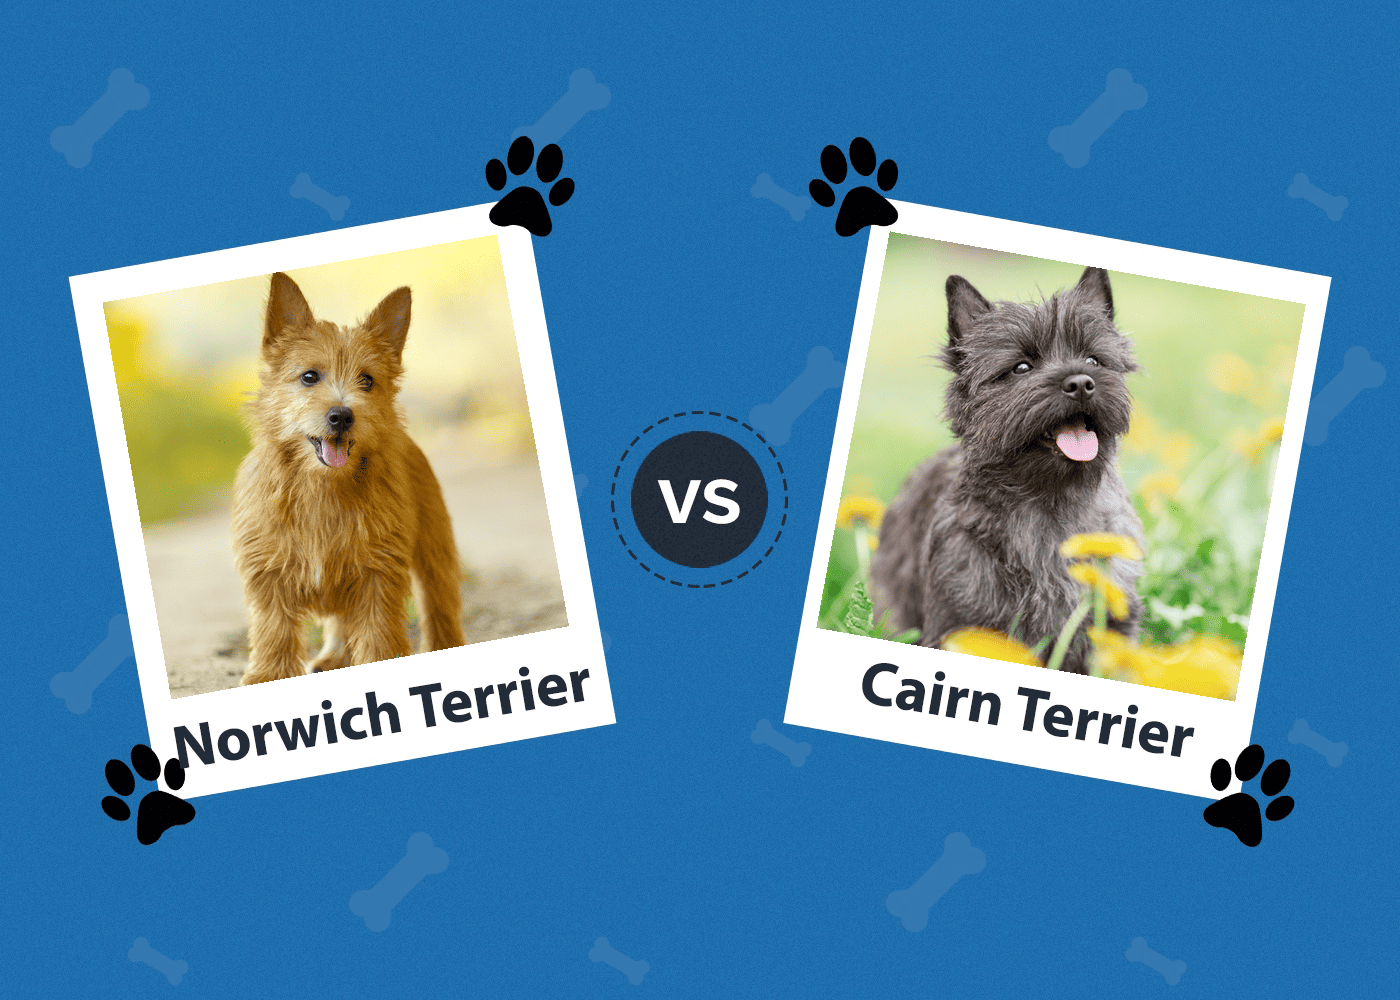 Norwich Terrier vs Cairn Terrier